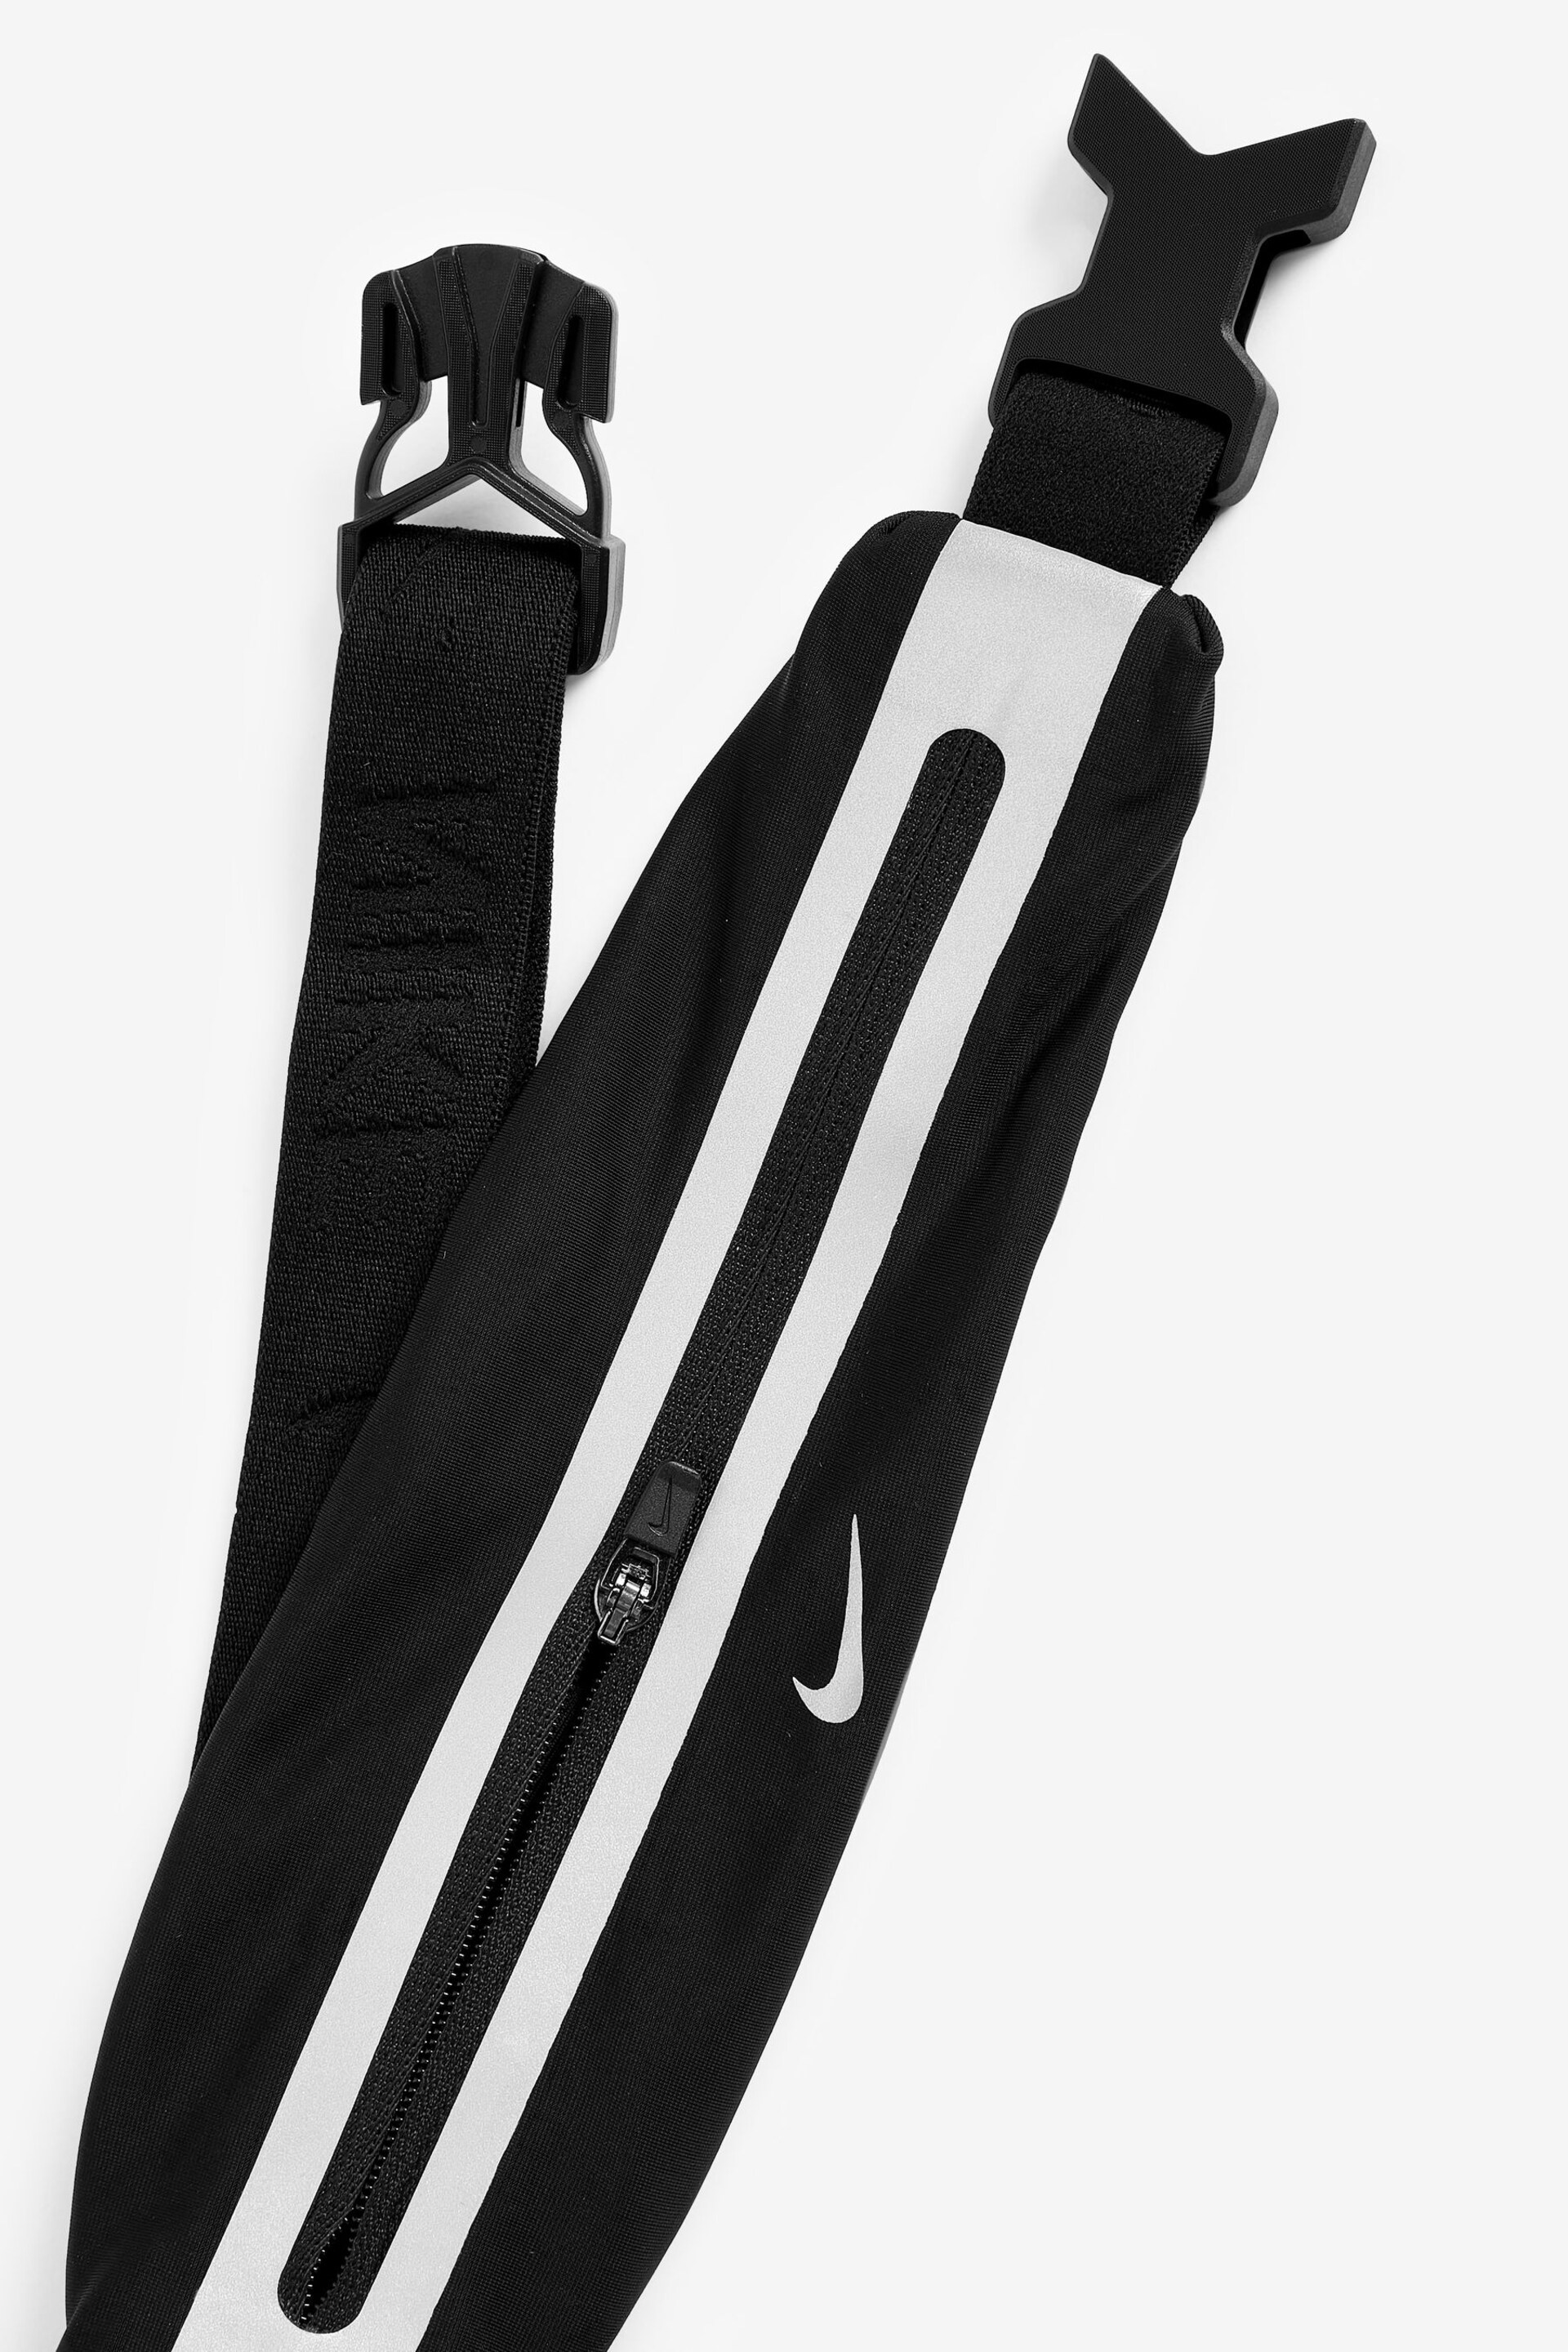 Nike Black Slim Waistpack 3.0 - Image 4 of 4